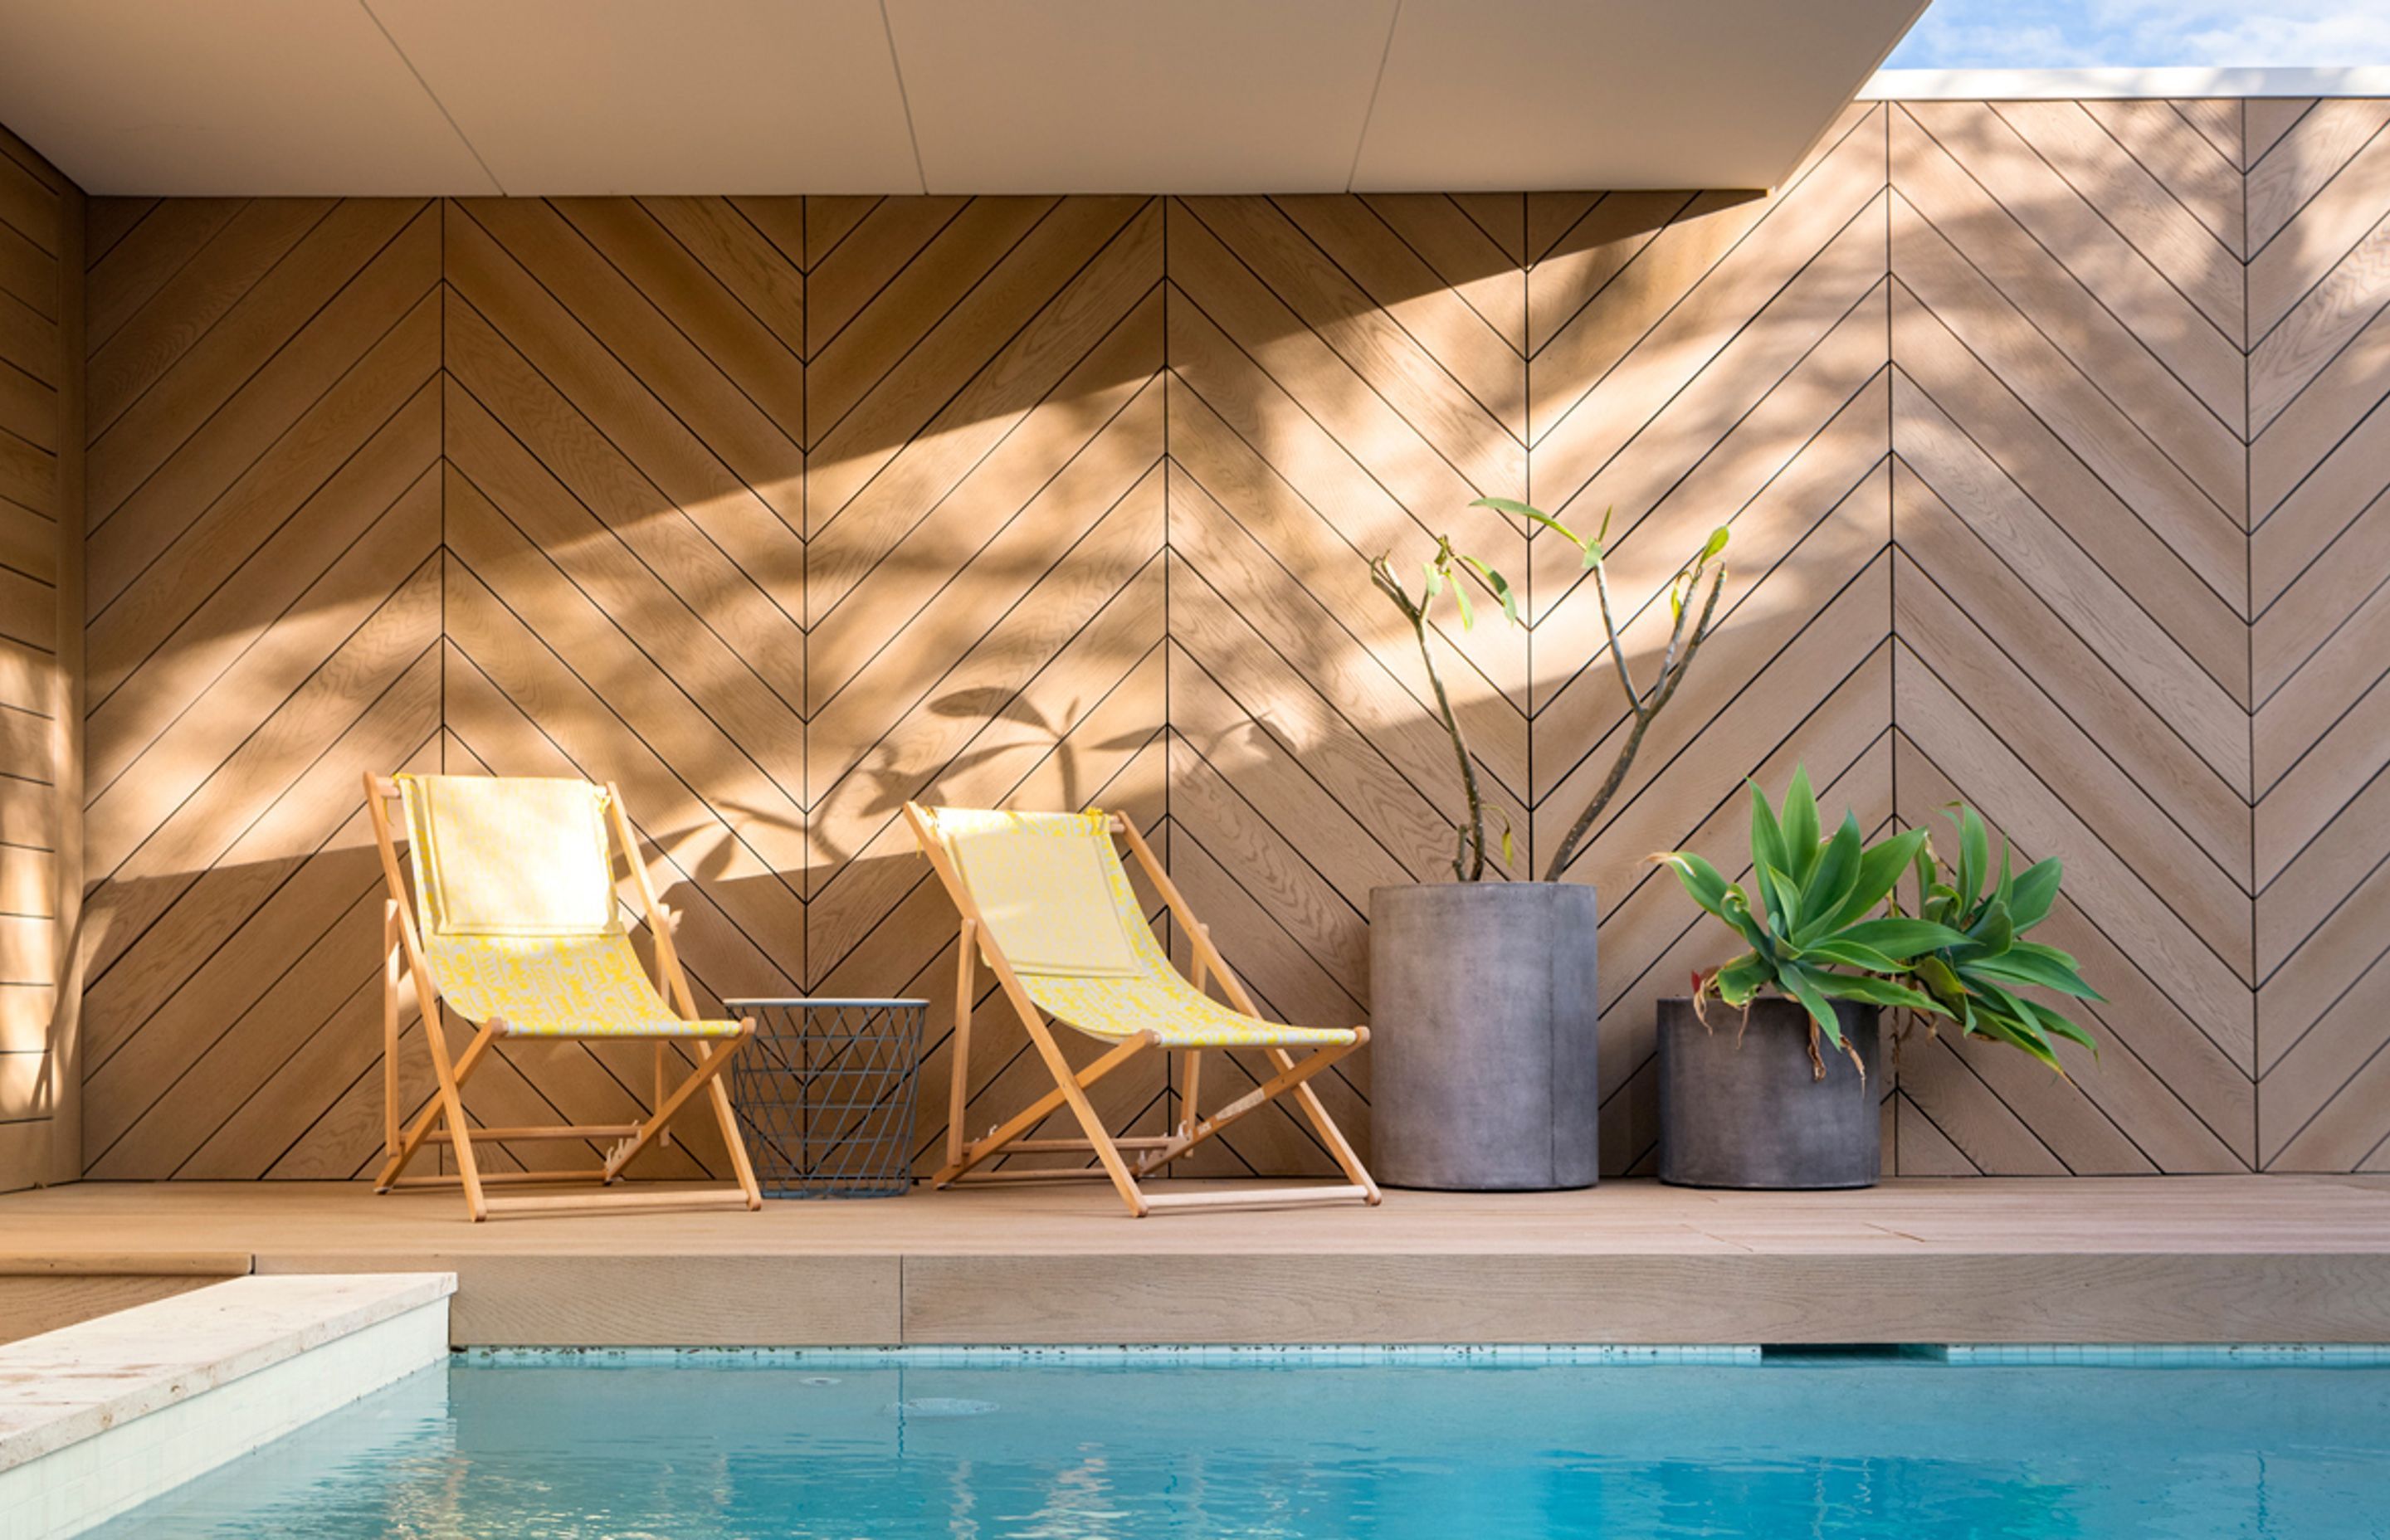 Herringbone style Golden Oak screening around pool deck